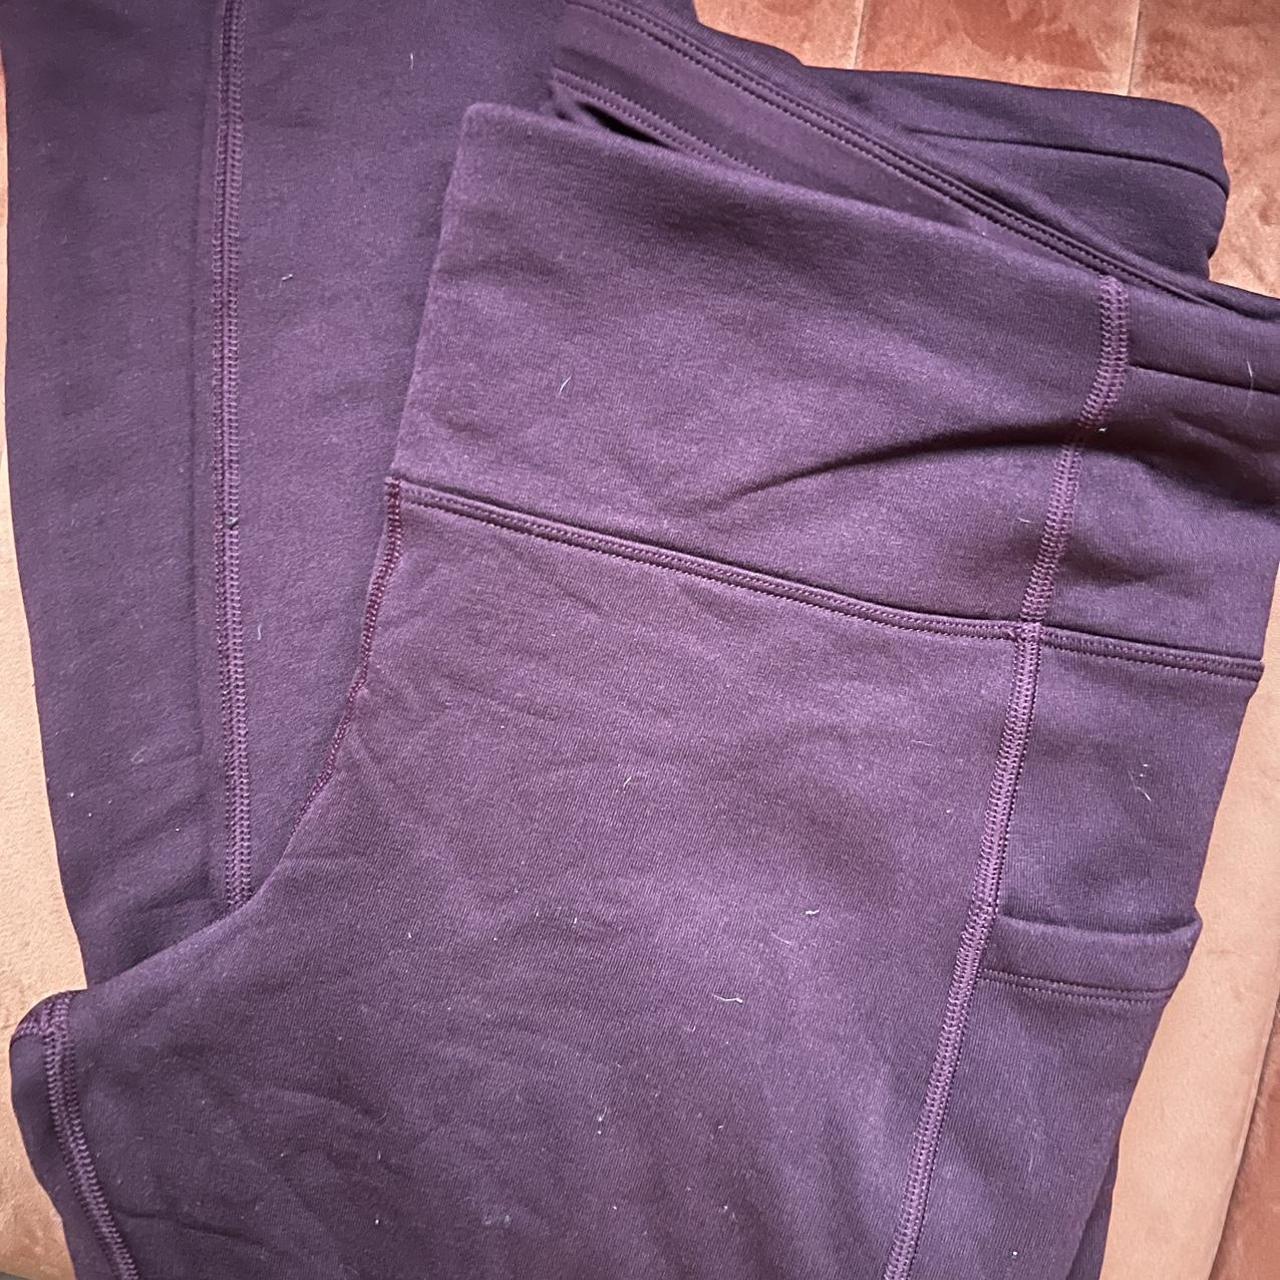 Althleta maroon insulated yoga pants. Worn only... - Depop